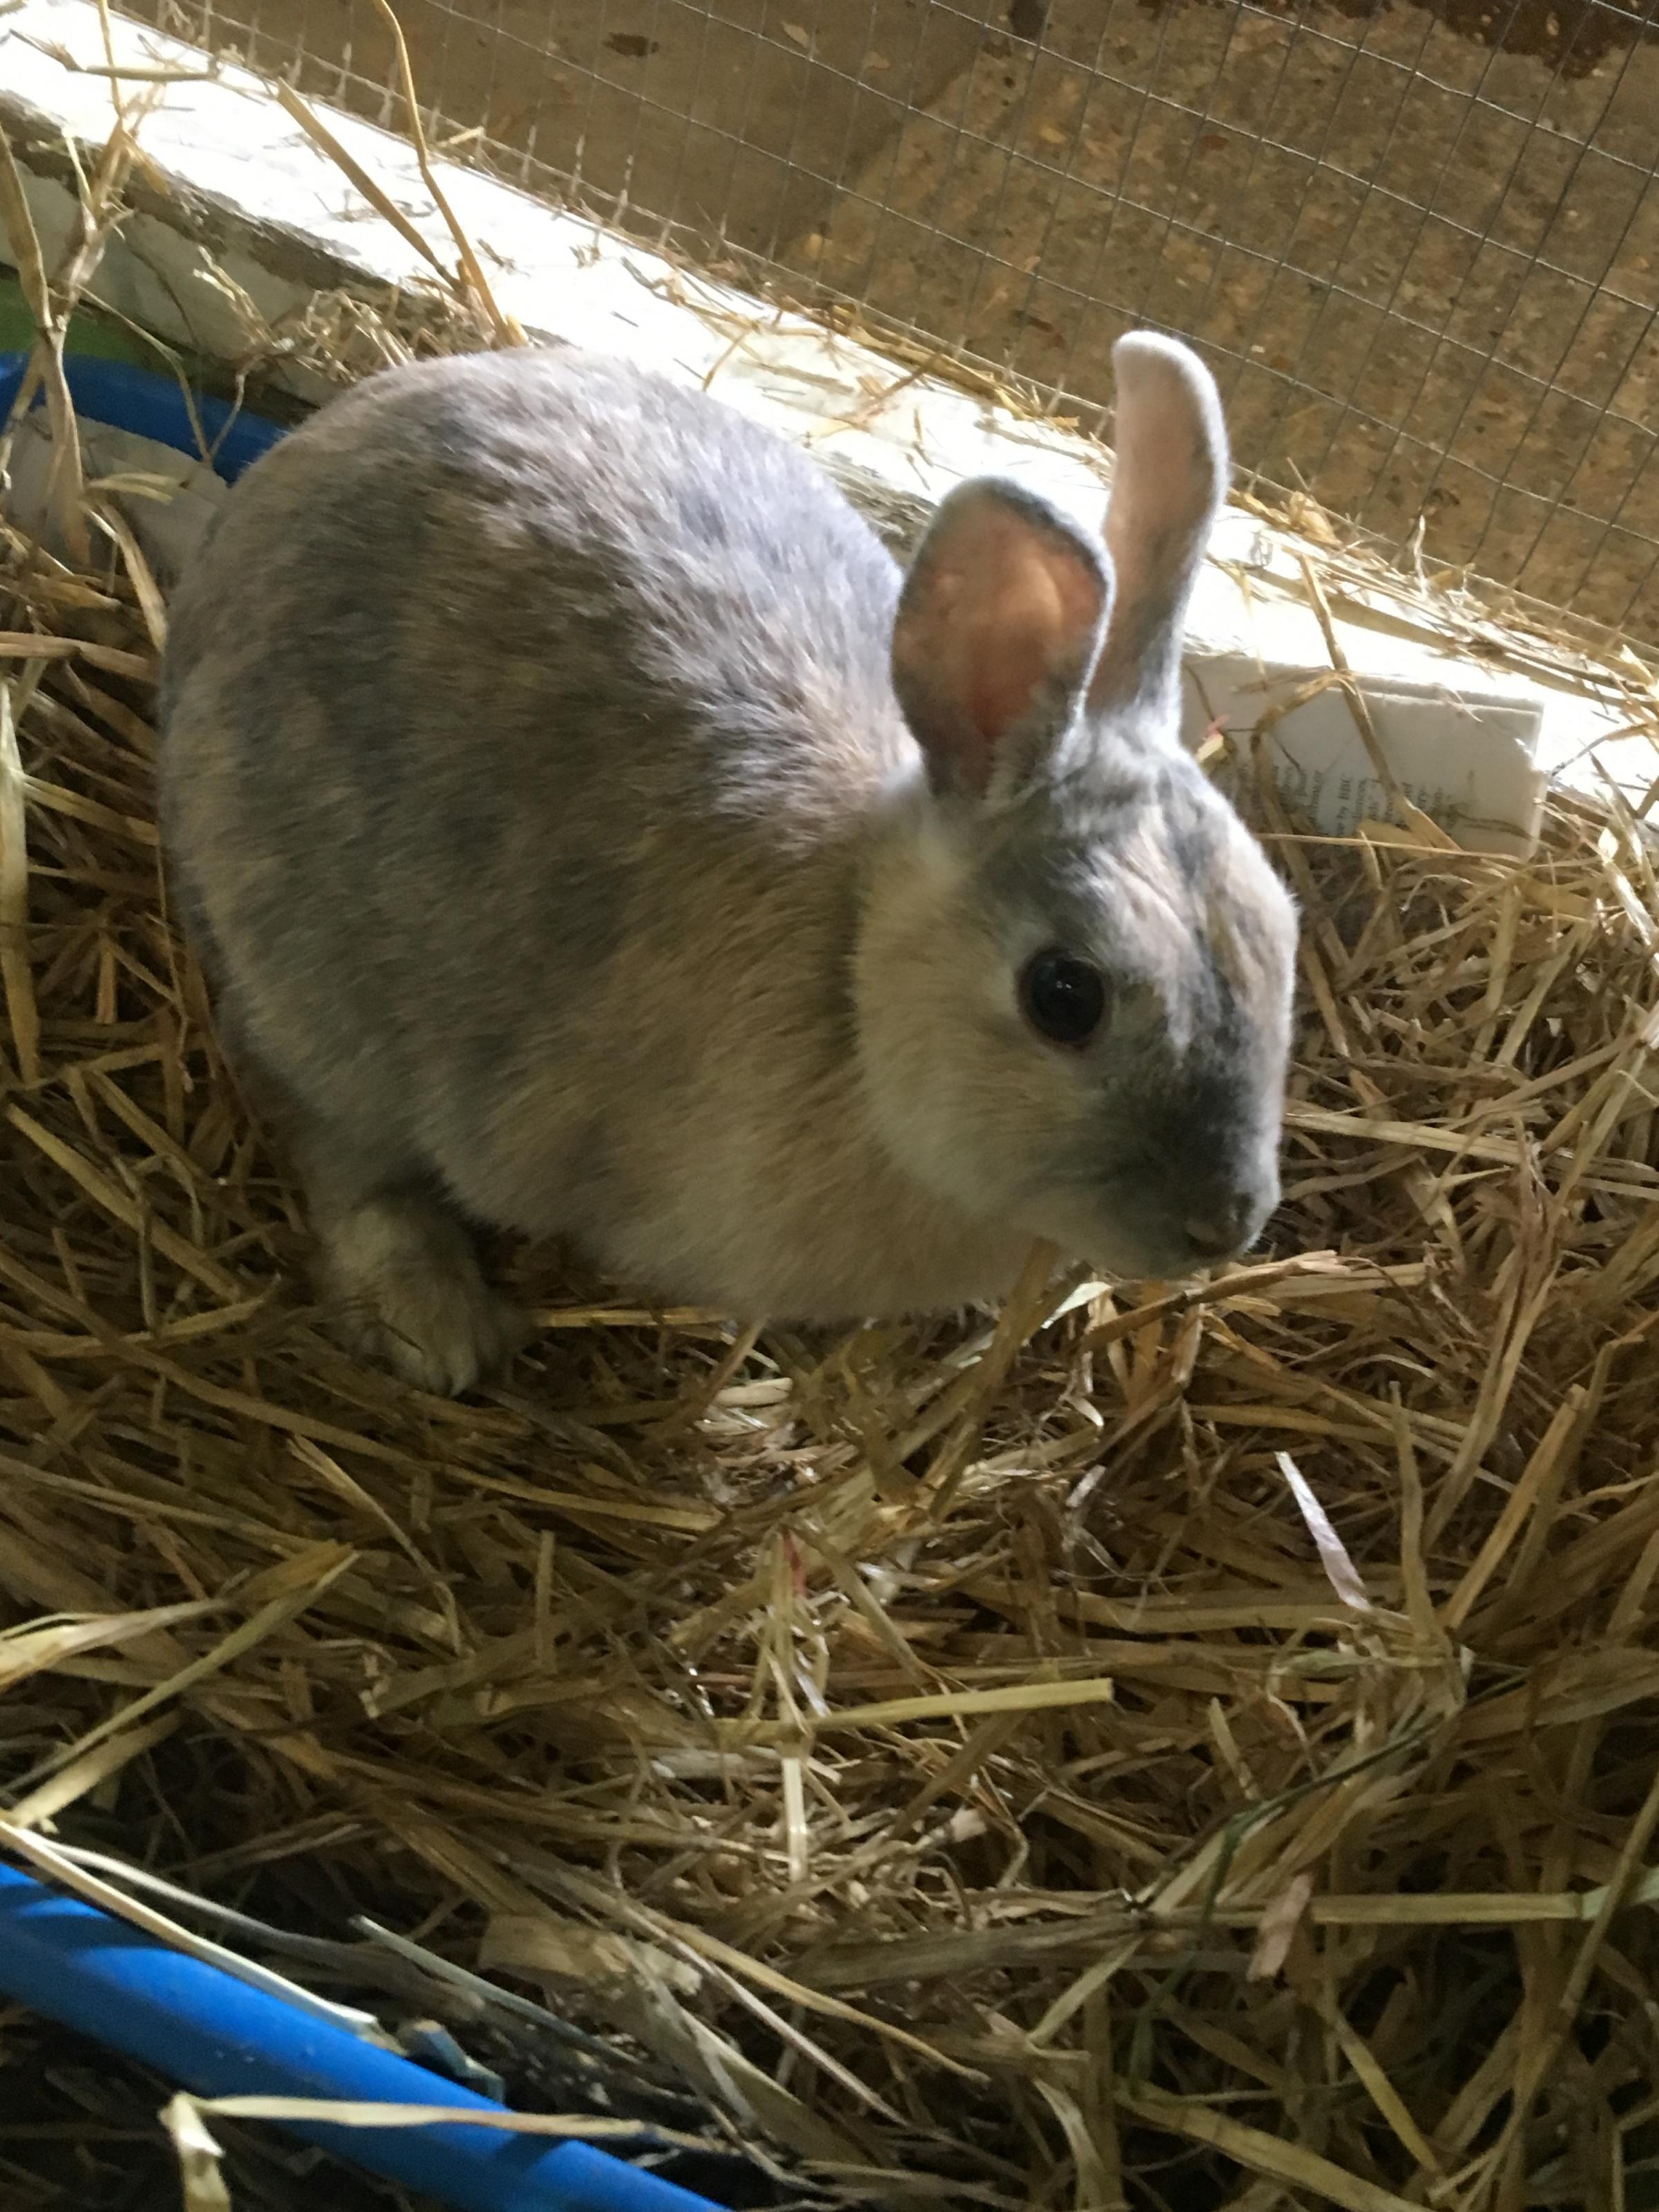 asda rabbit hay